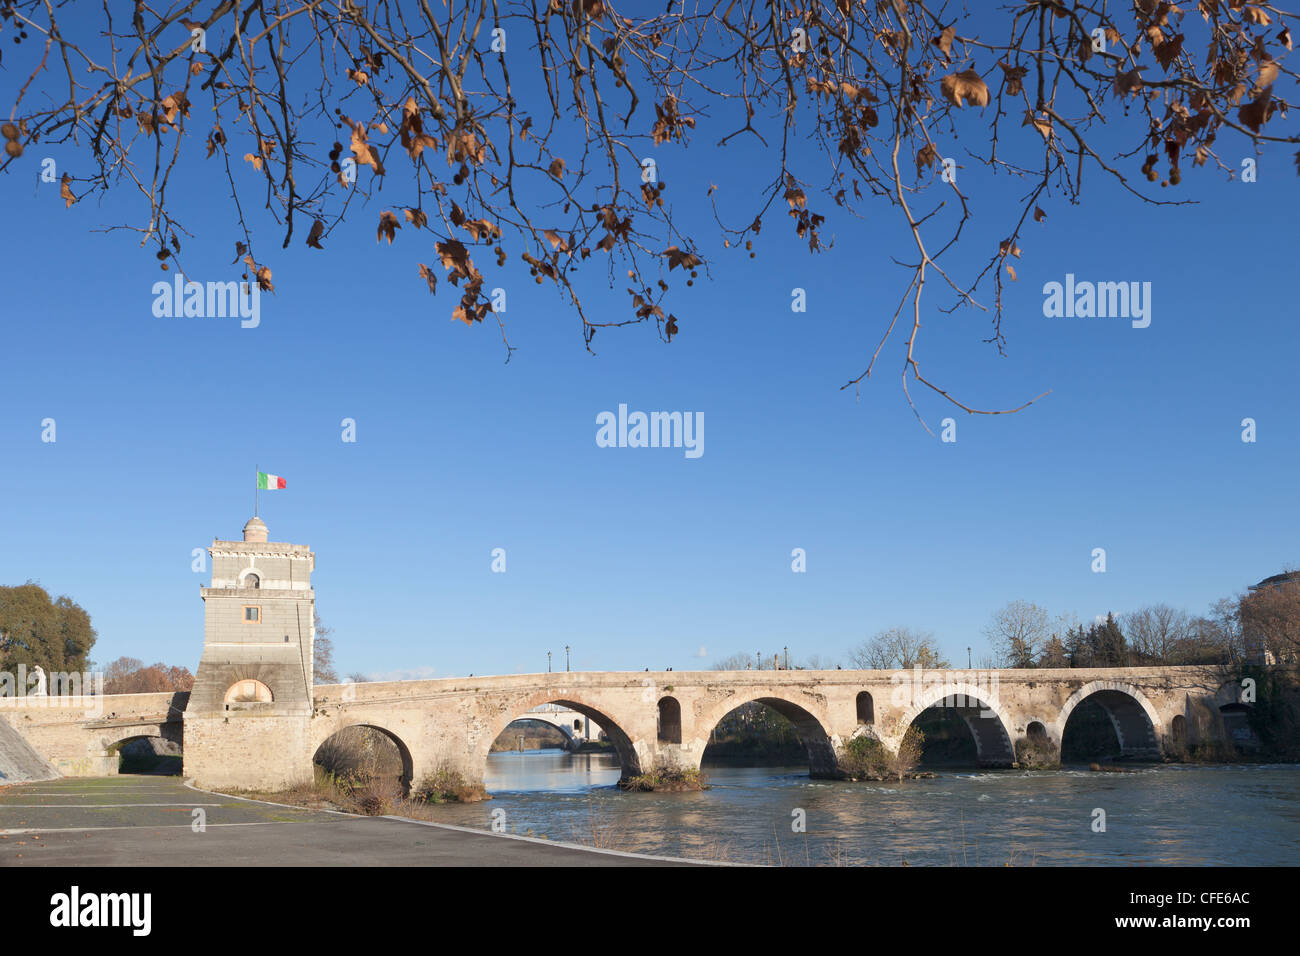 Milvian bridge, ponte milvio, Rome, Italy Stock Photo